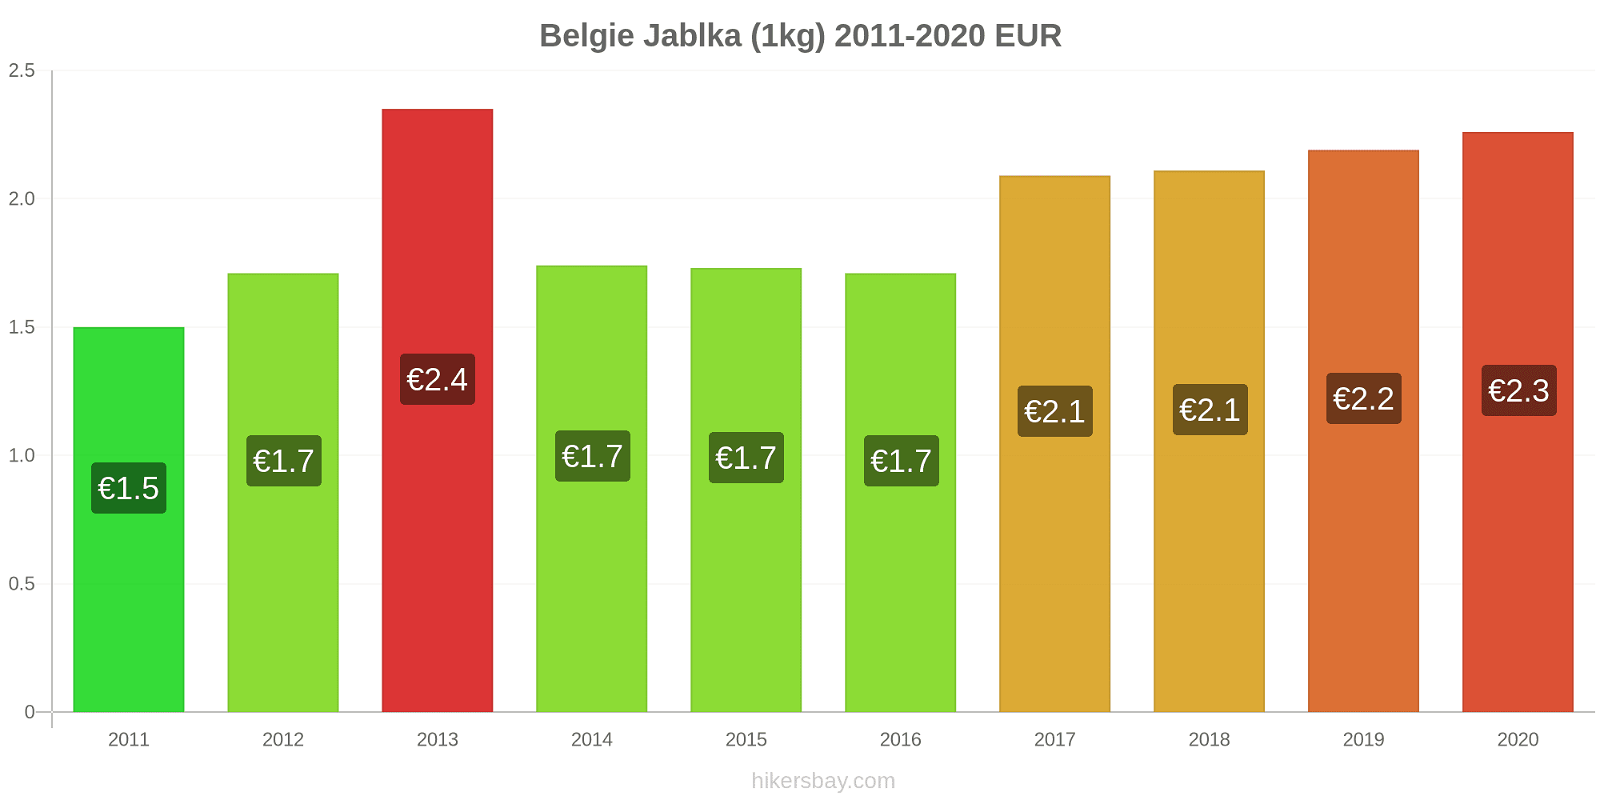 Belgie změny cen Jablka (1kg) hikersbay.com